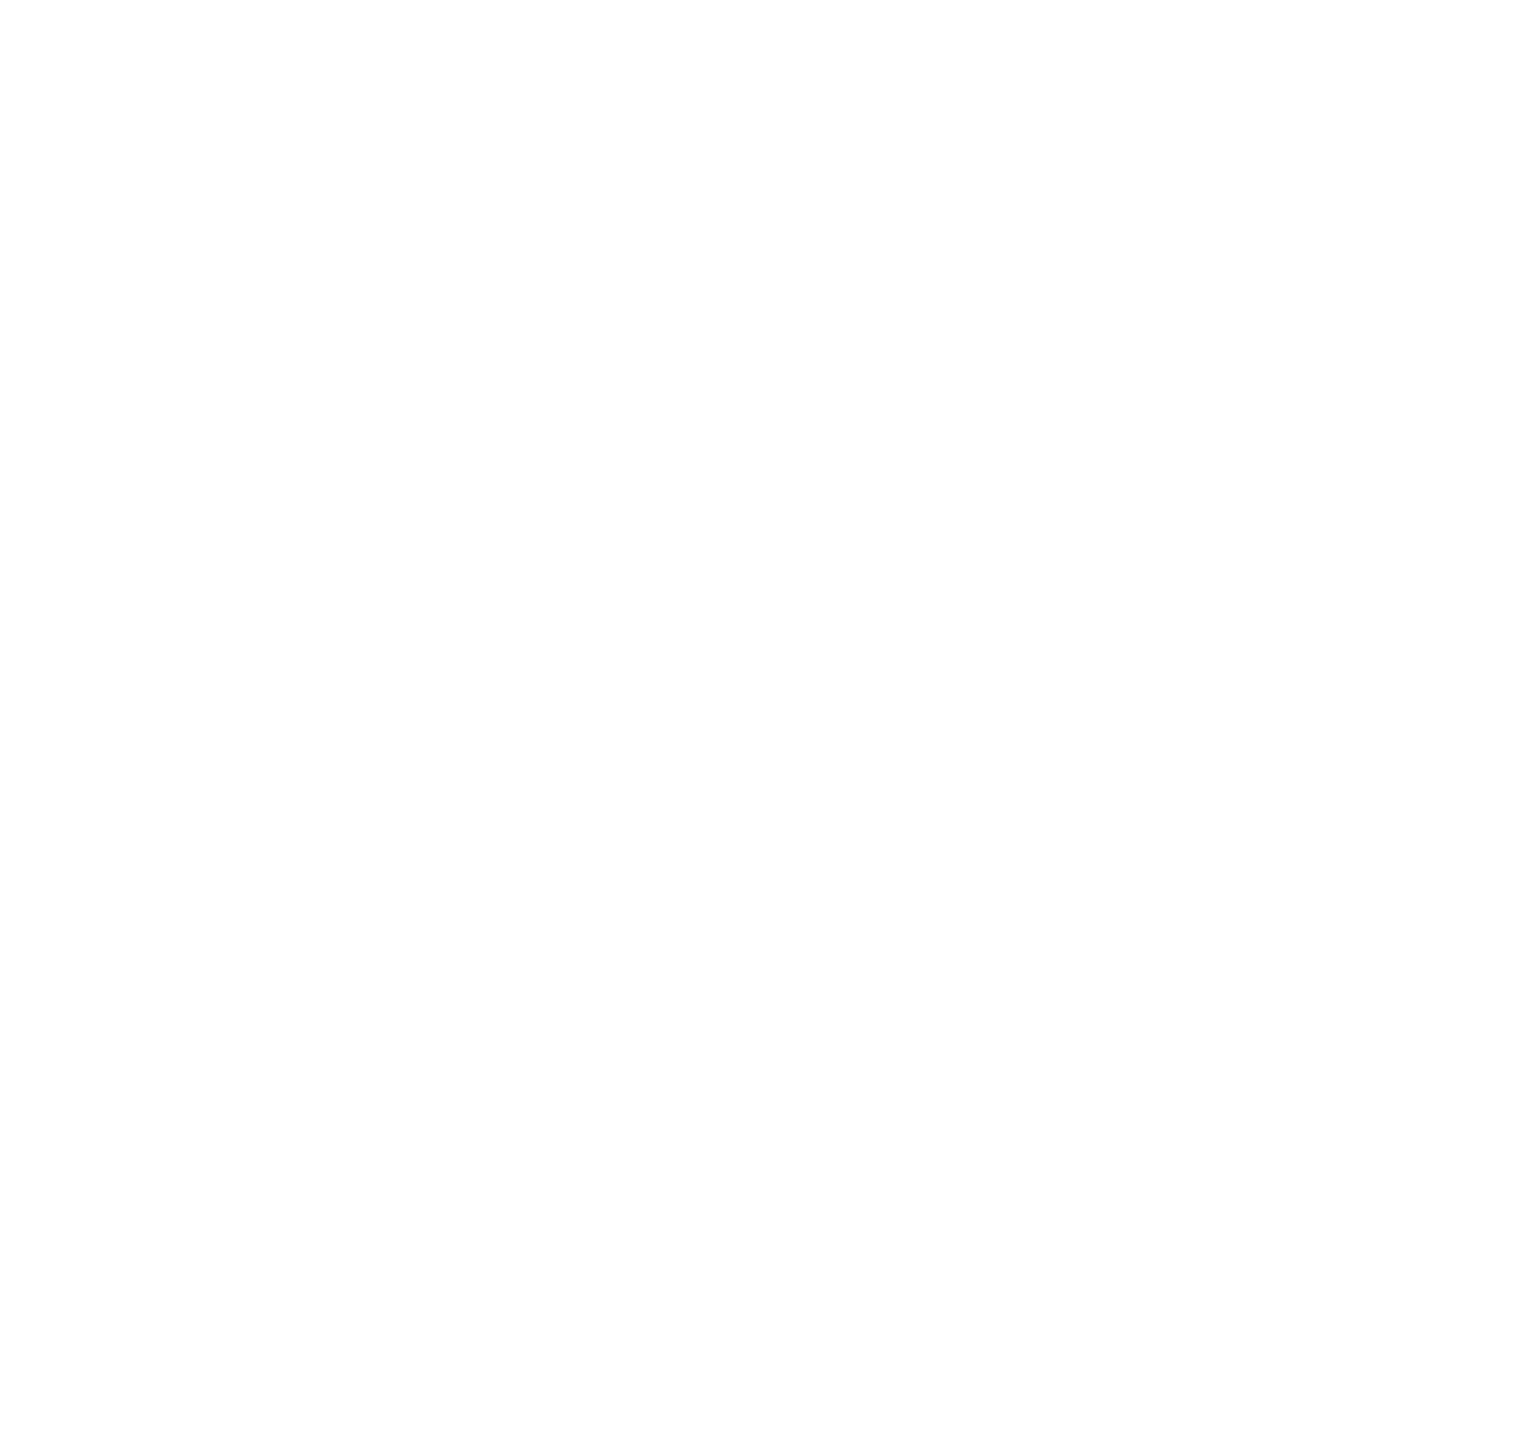 Cross Country Healthcare logo pour fonds sombres (PNG transparent)